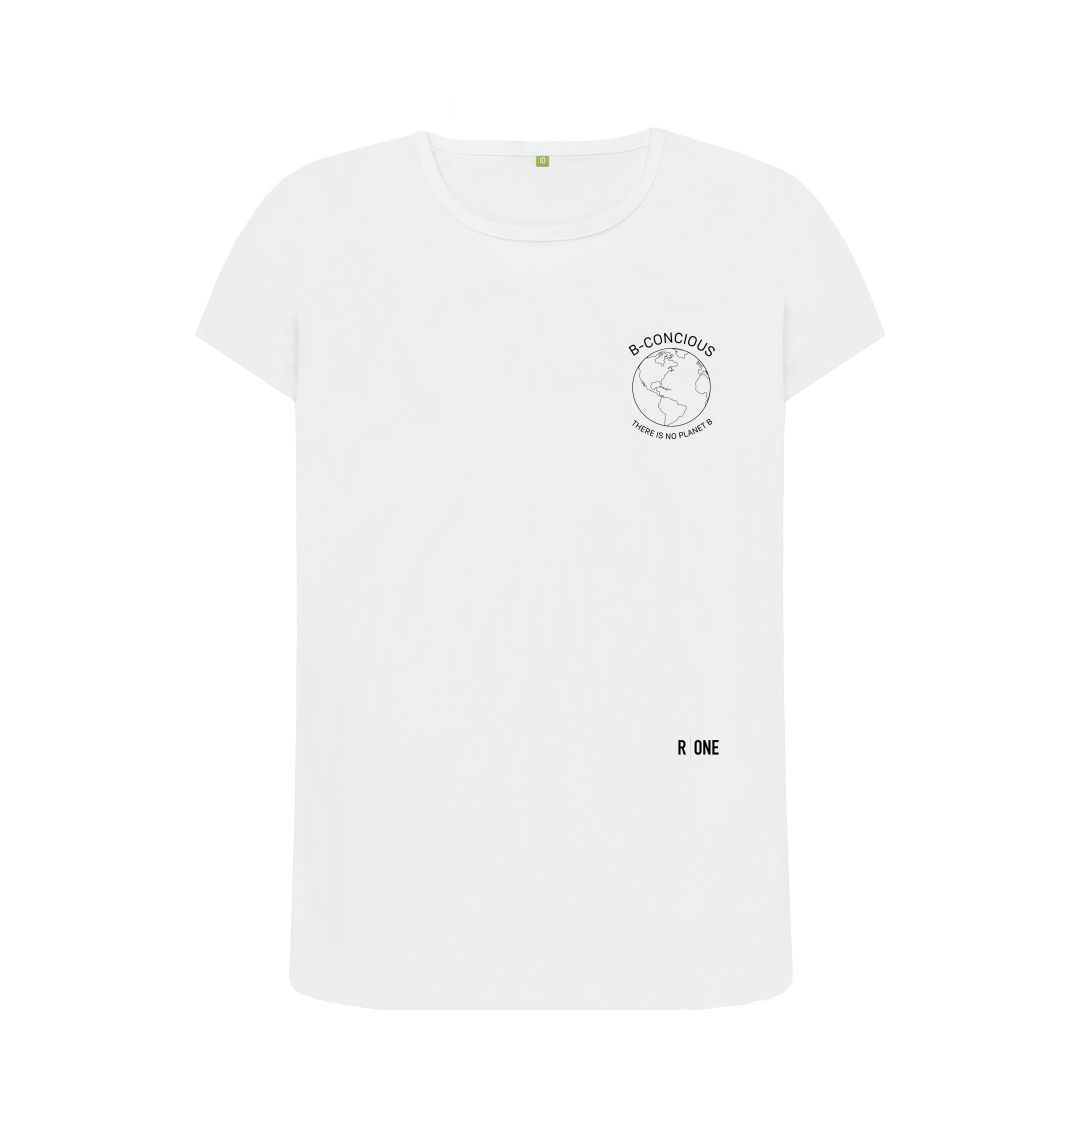 B-Conscious Organic T-shirt - White